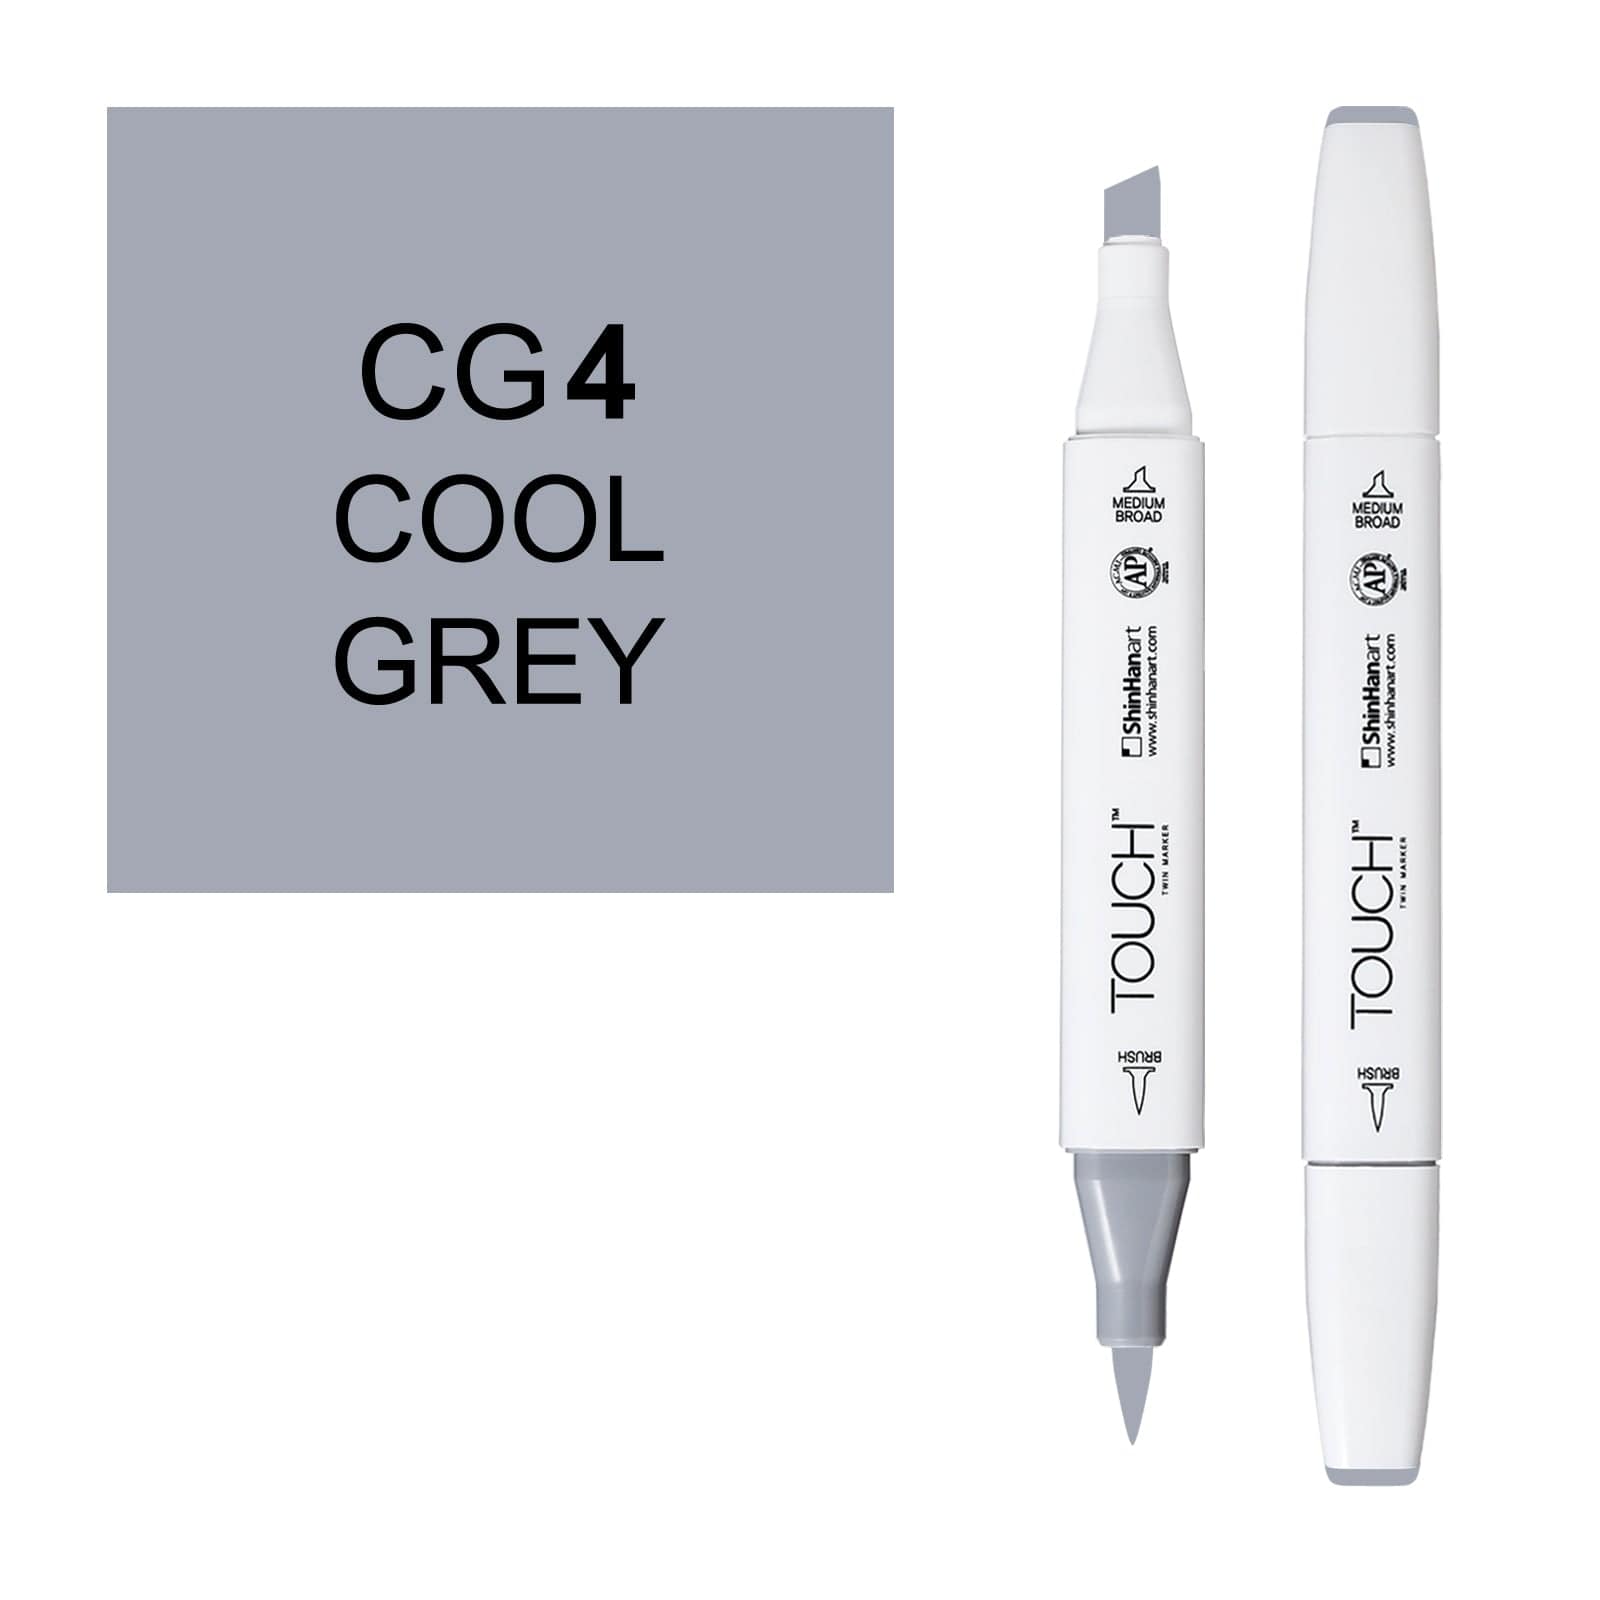 ShinHanart Touch Twin Brush Markers 4 Cool grey